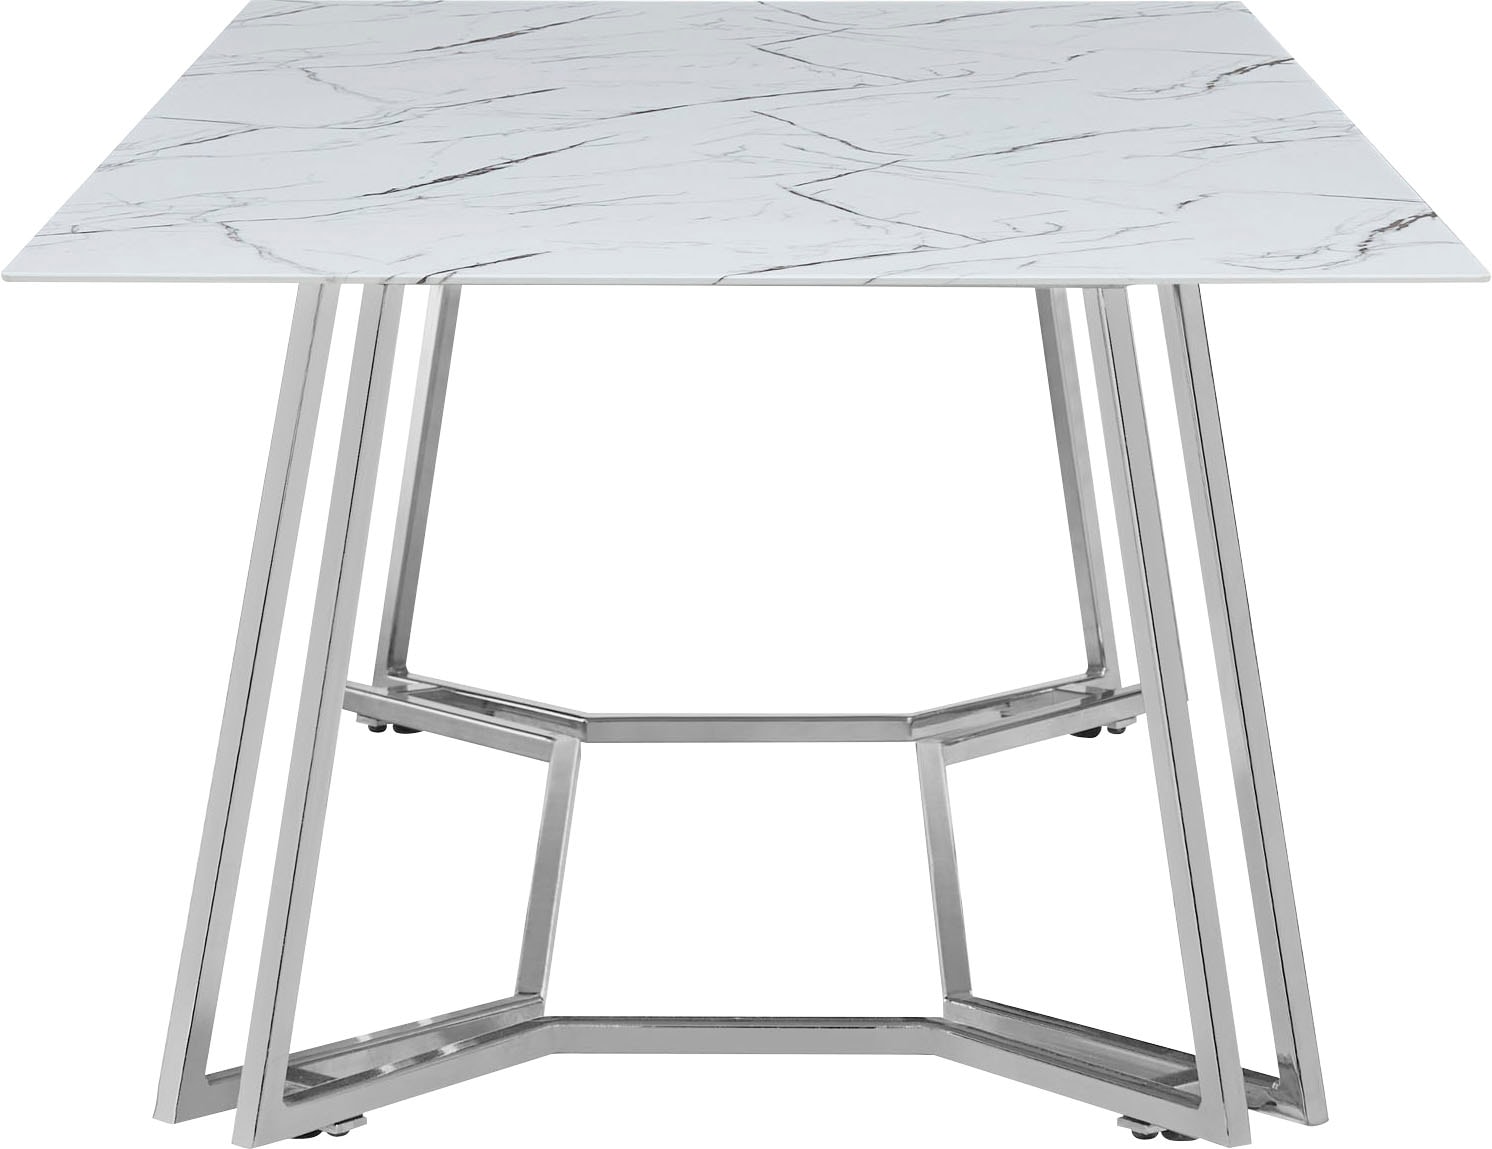 SalesFever Couchtisch, Tischplatte im Marmor-Design